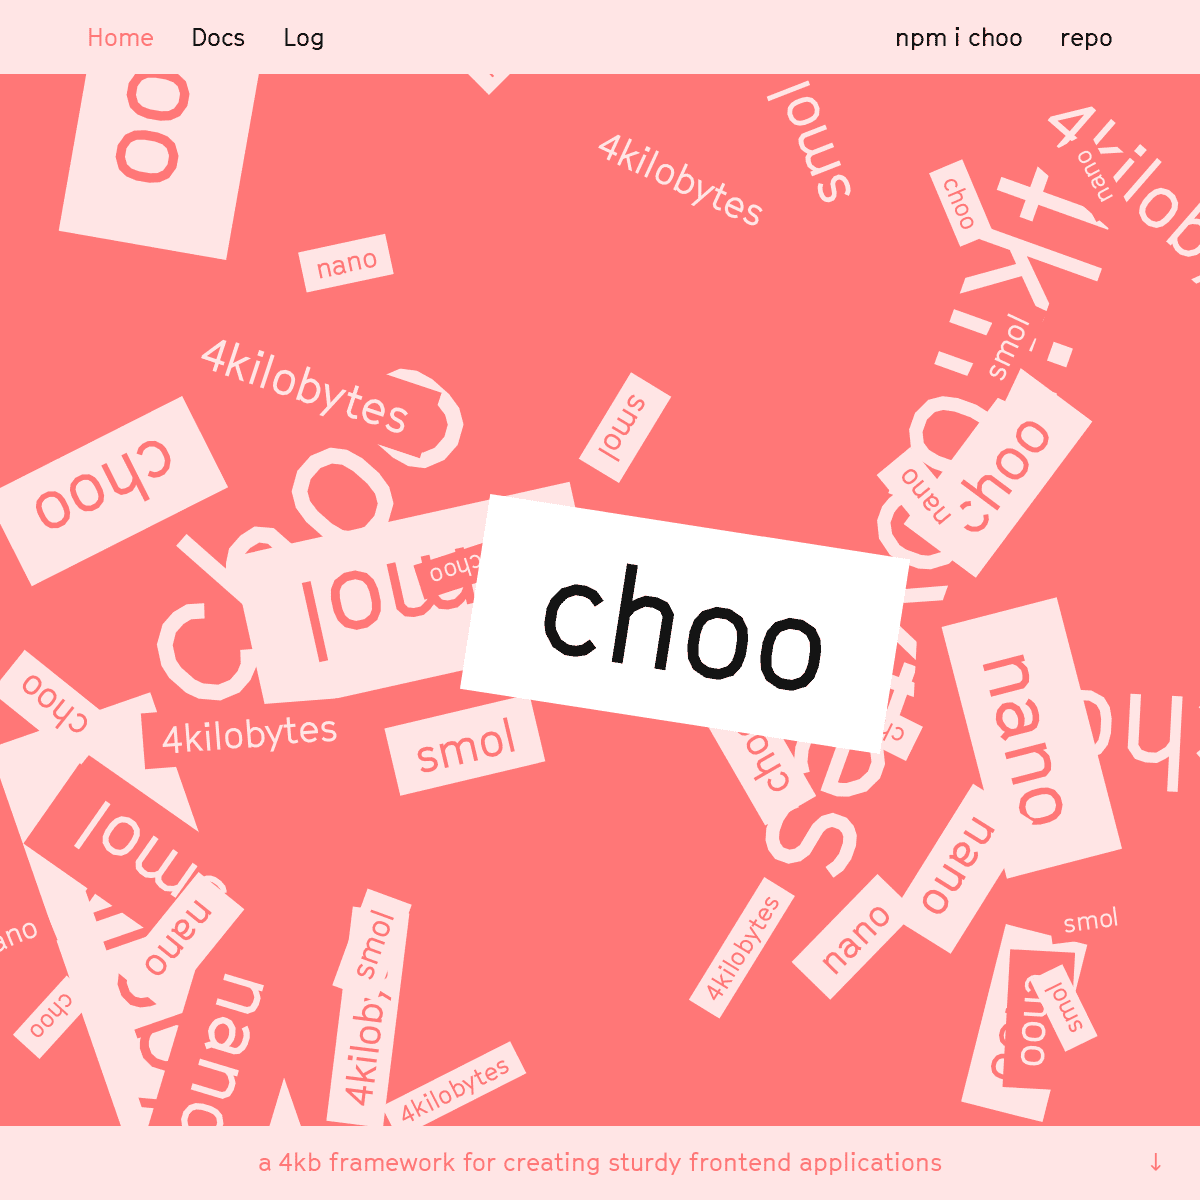 A complete backup of choo.io